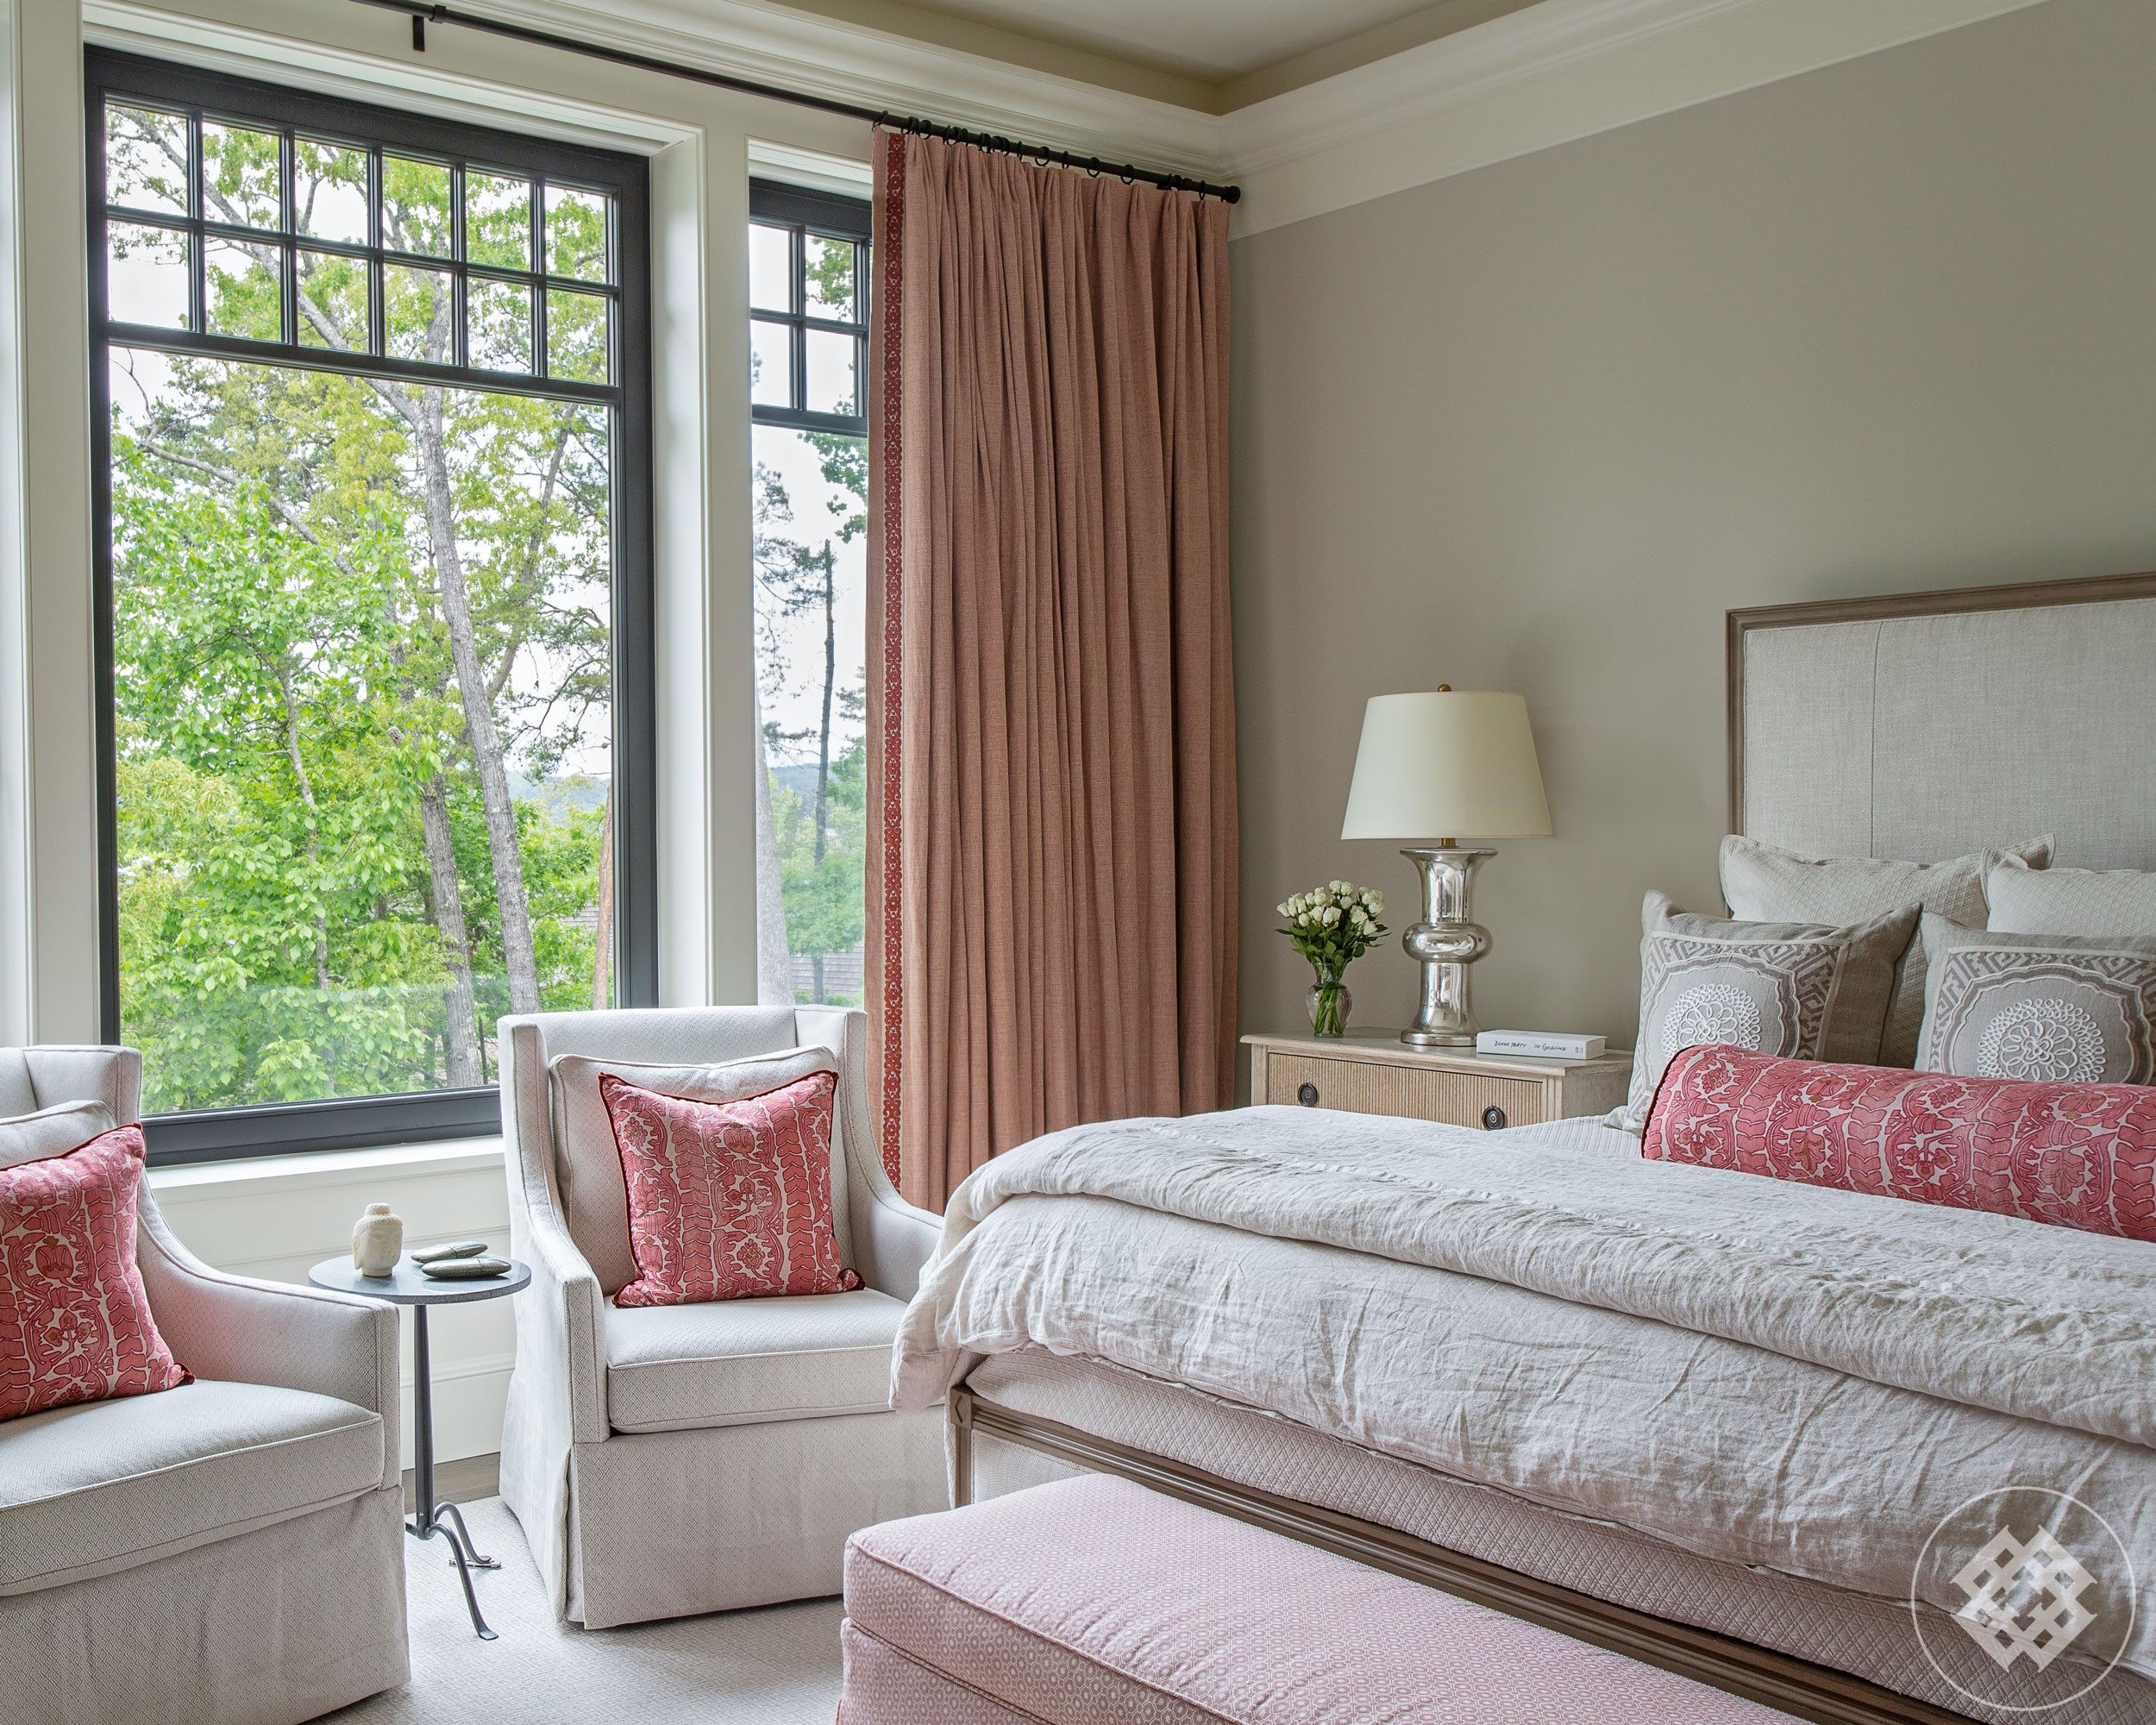 kkl-master-bedroom-with-custom-curtains-and-bedding.jpg